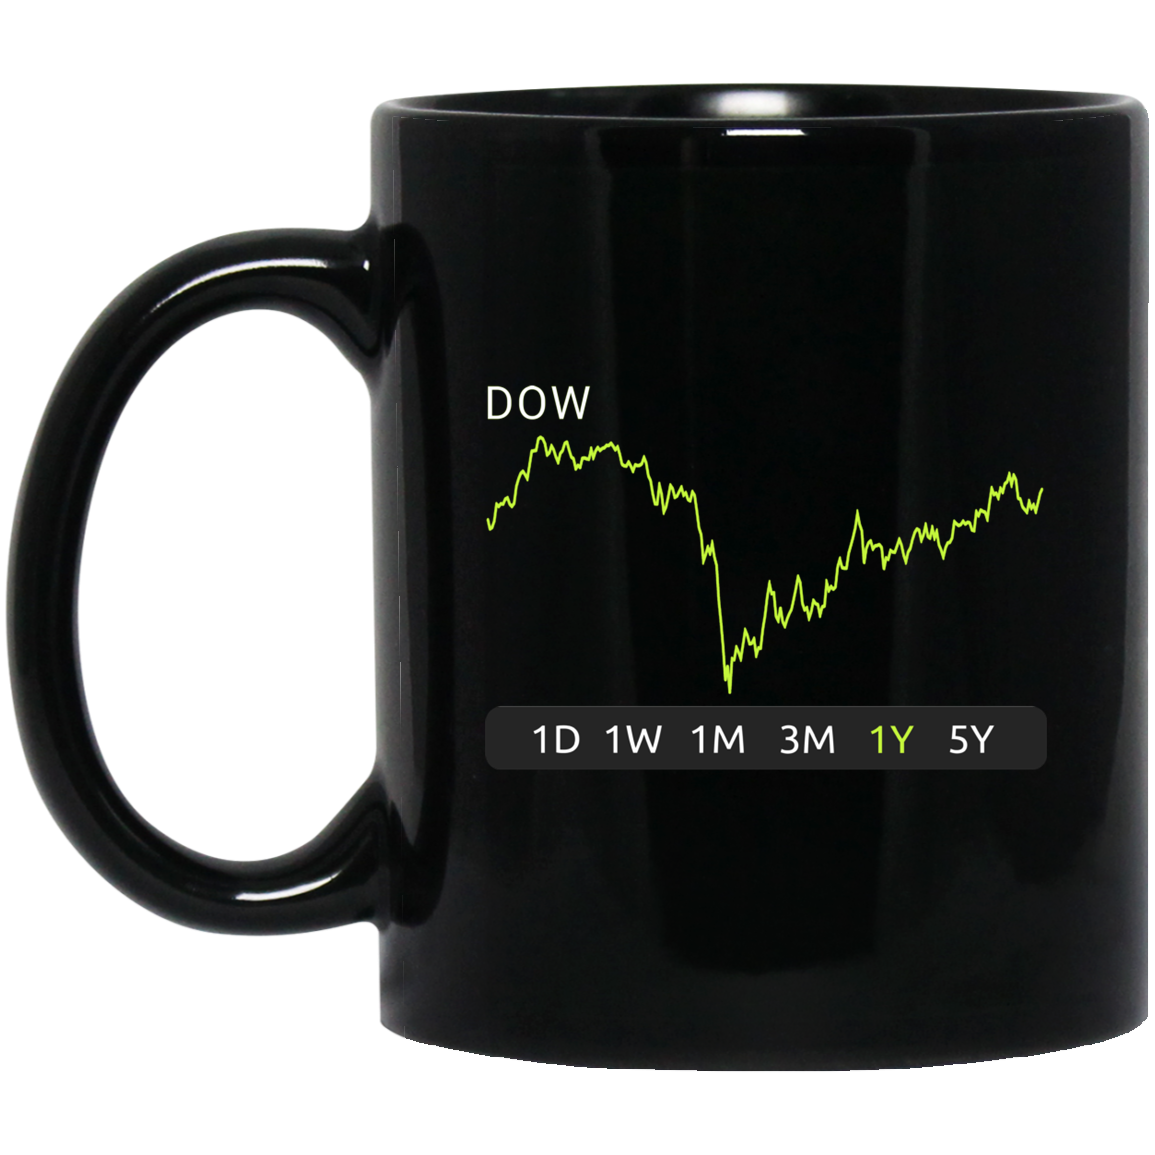 DOW Stock 1y Mug